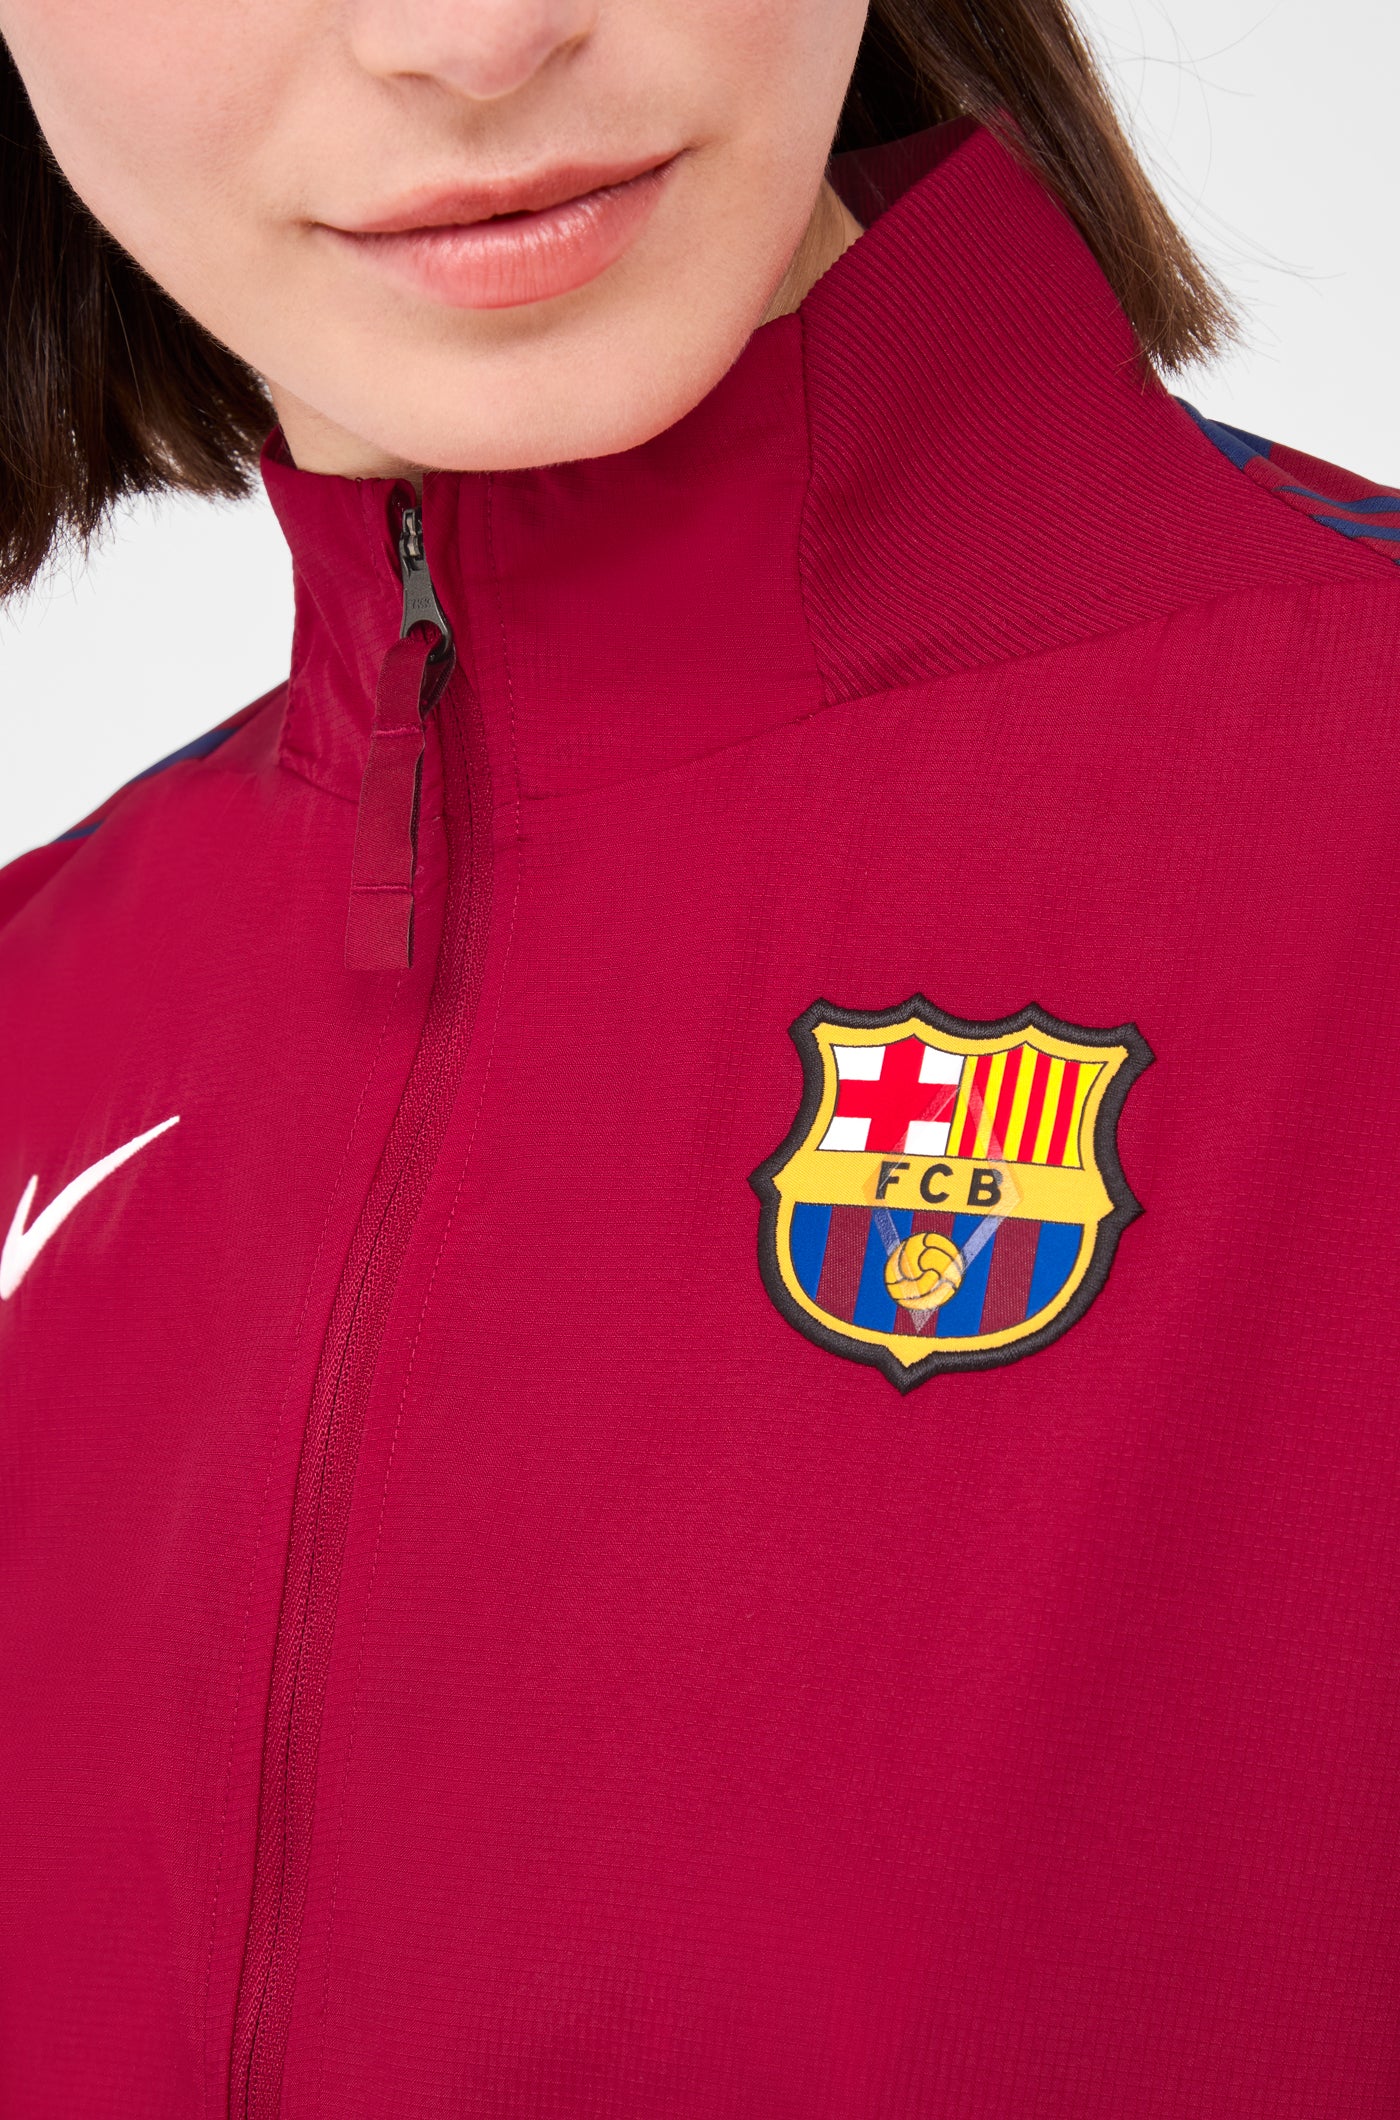 FC Barcelona Pre-Match home Jacket 23/24 - Women